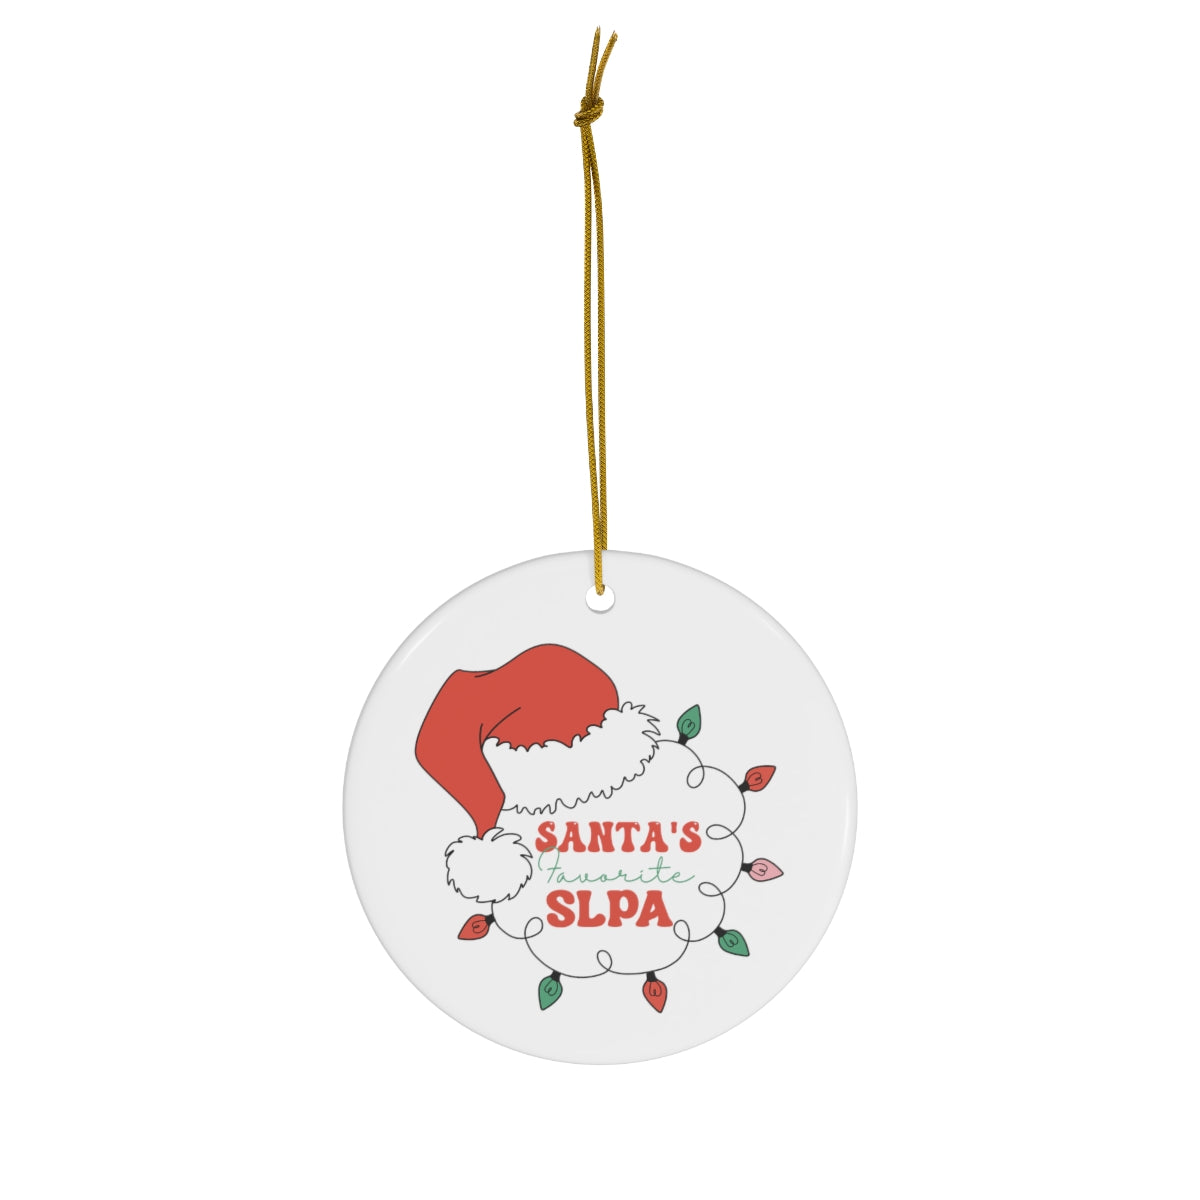 Santa's Favorite SLPA Ornament